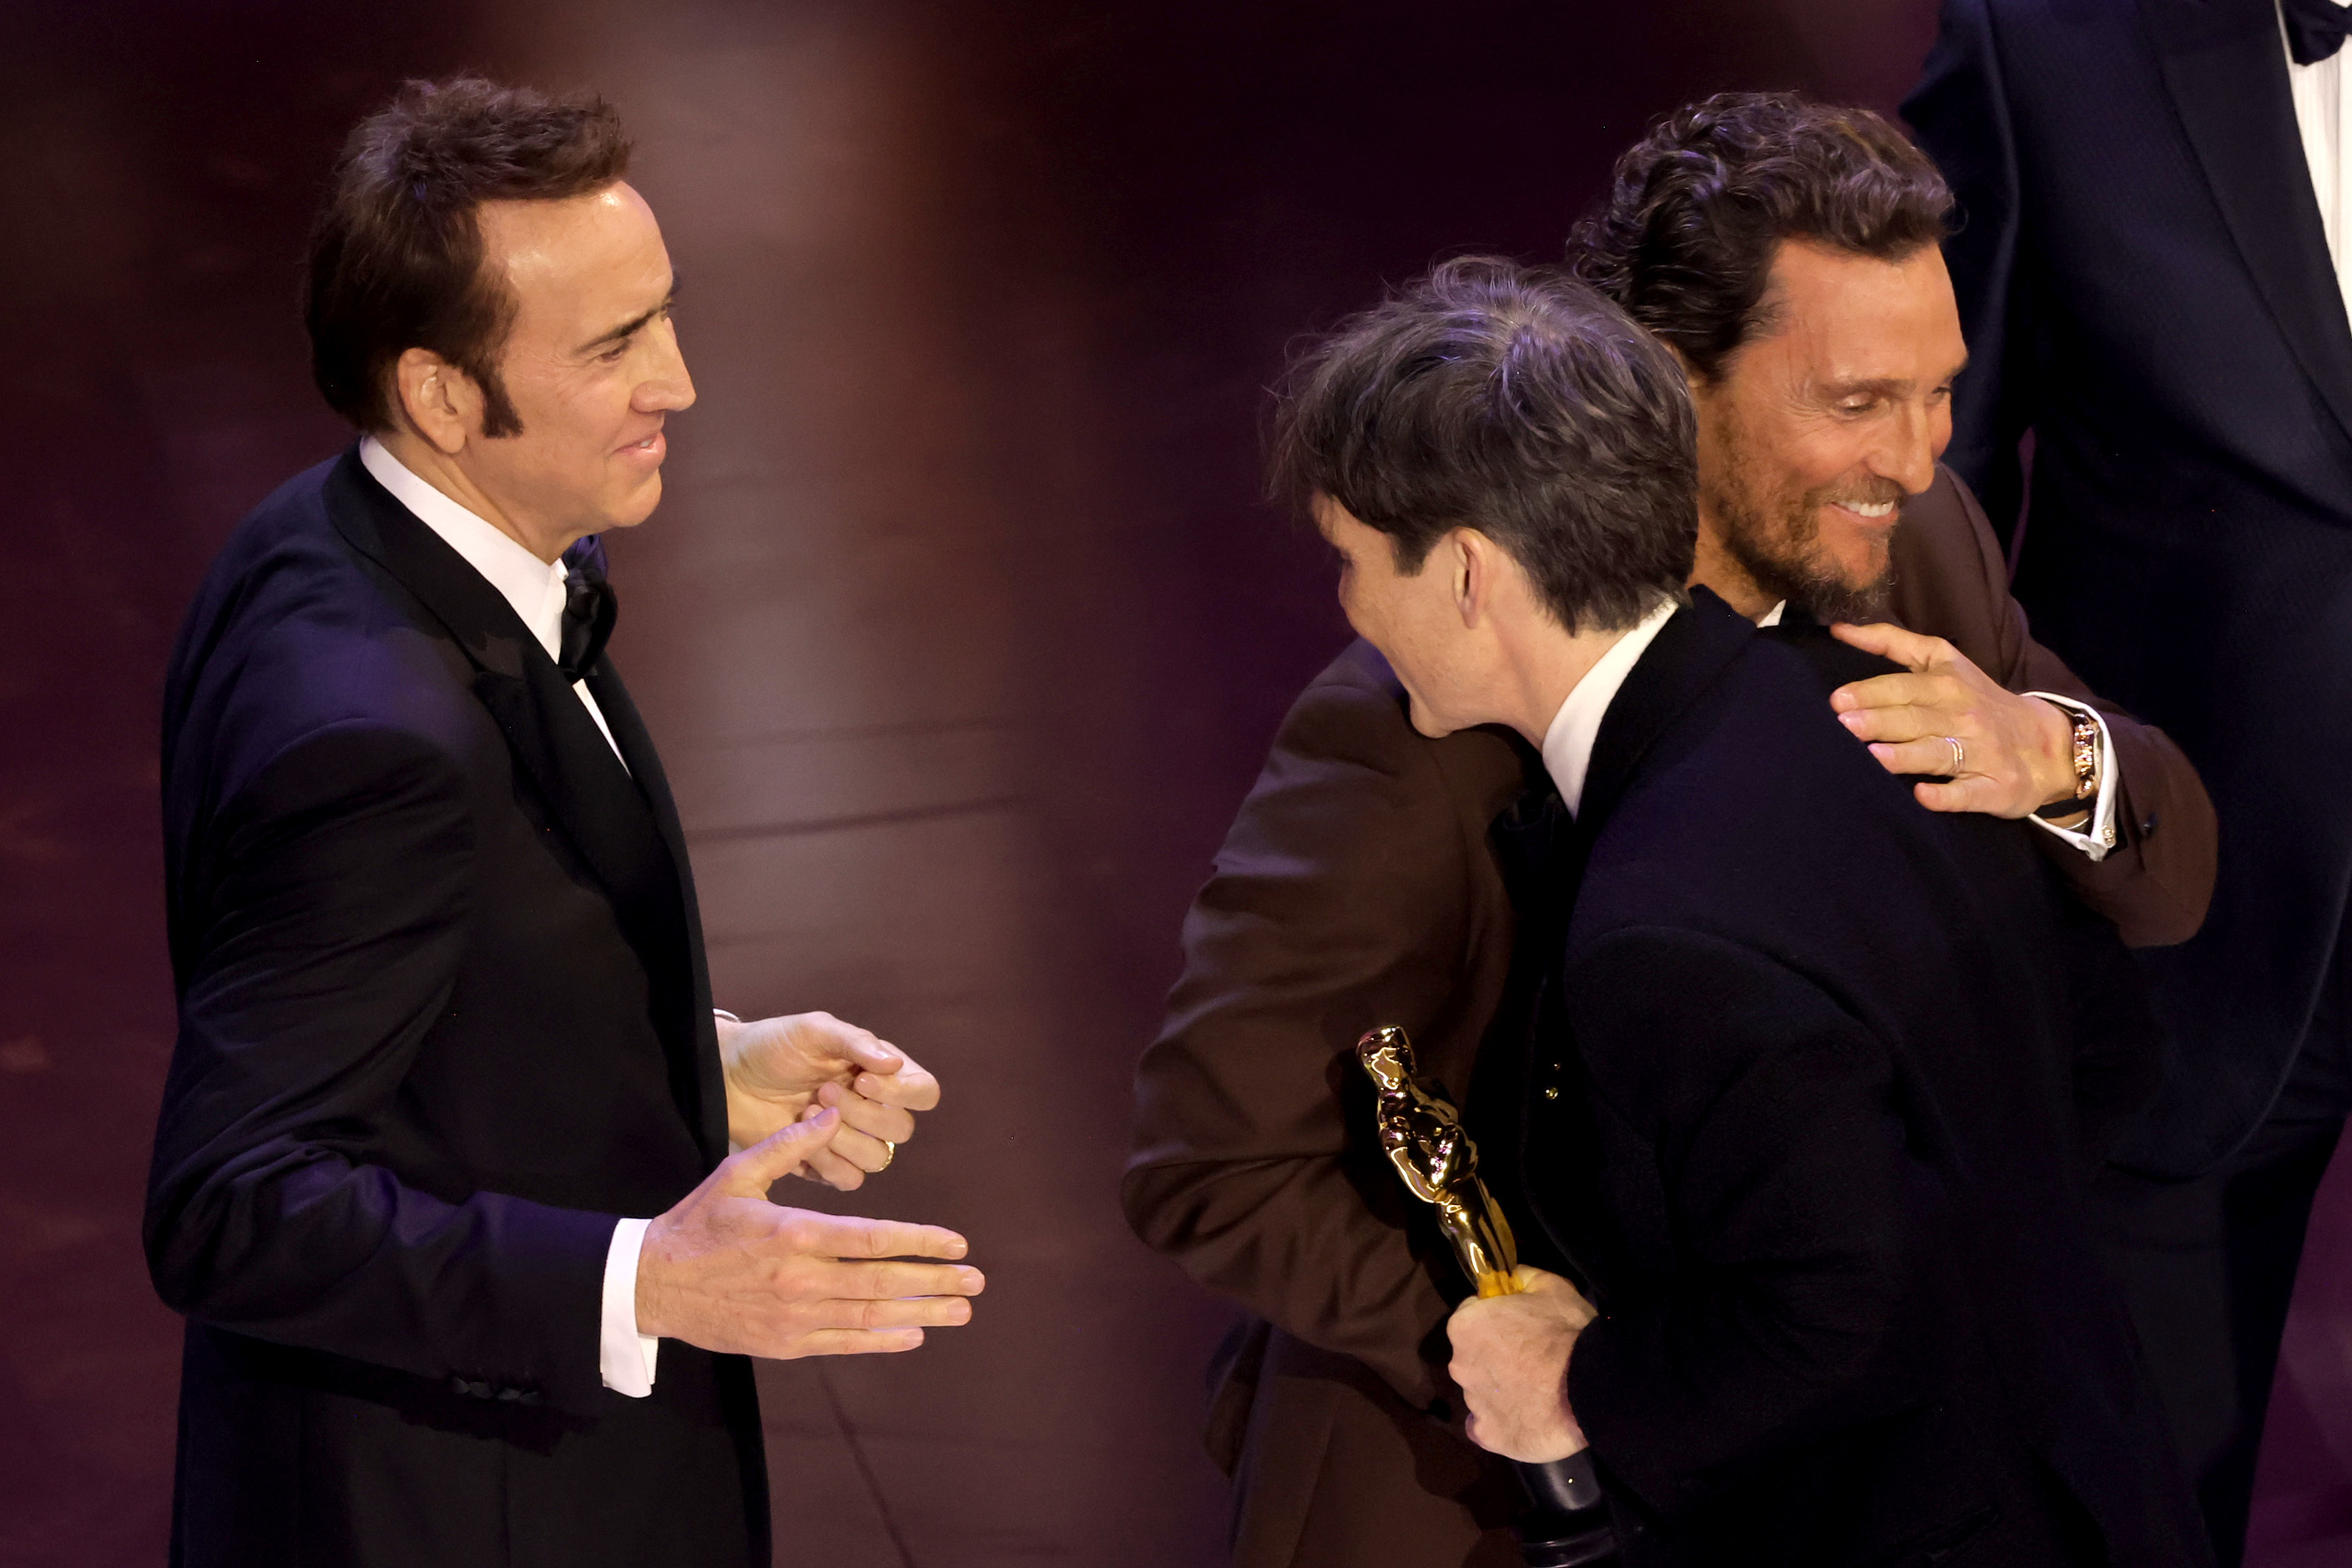 Cillian Murphy hugging Matthew McConaughey as he accepts his Oscar as Nicholas Cage looks on